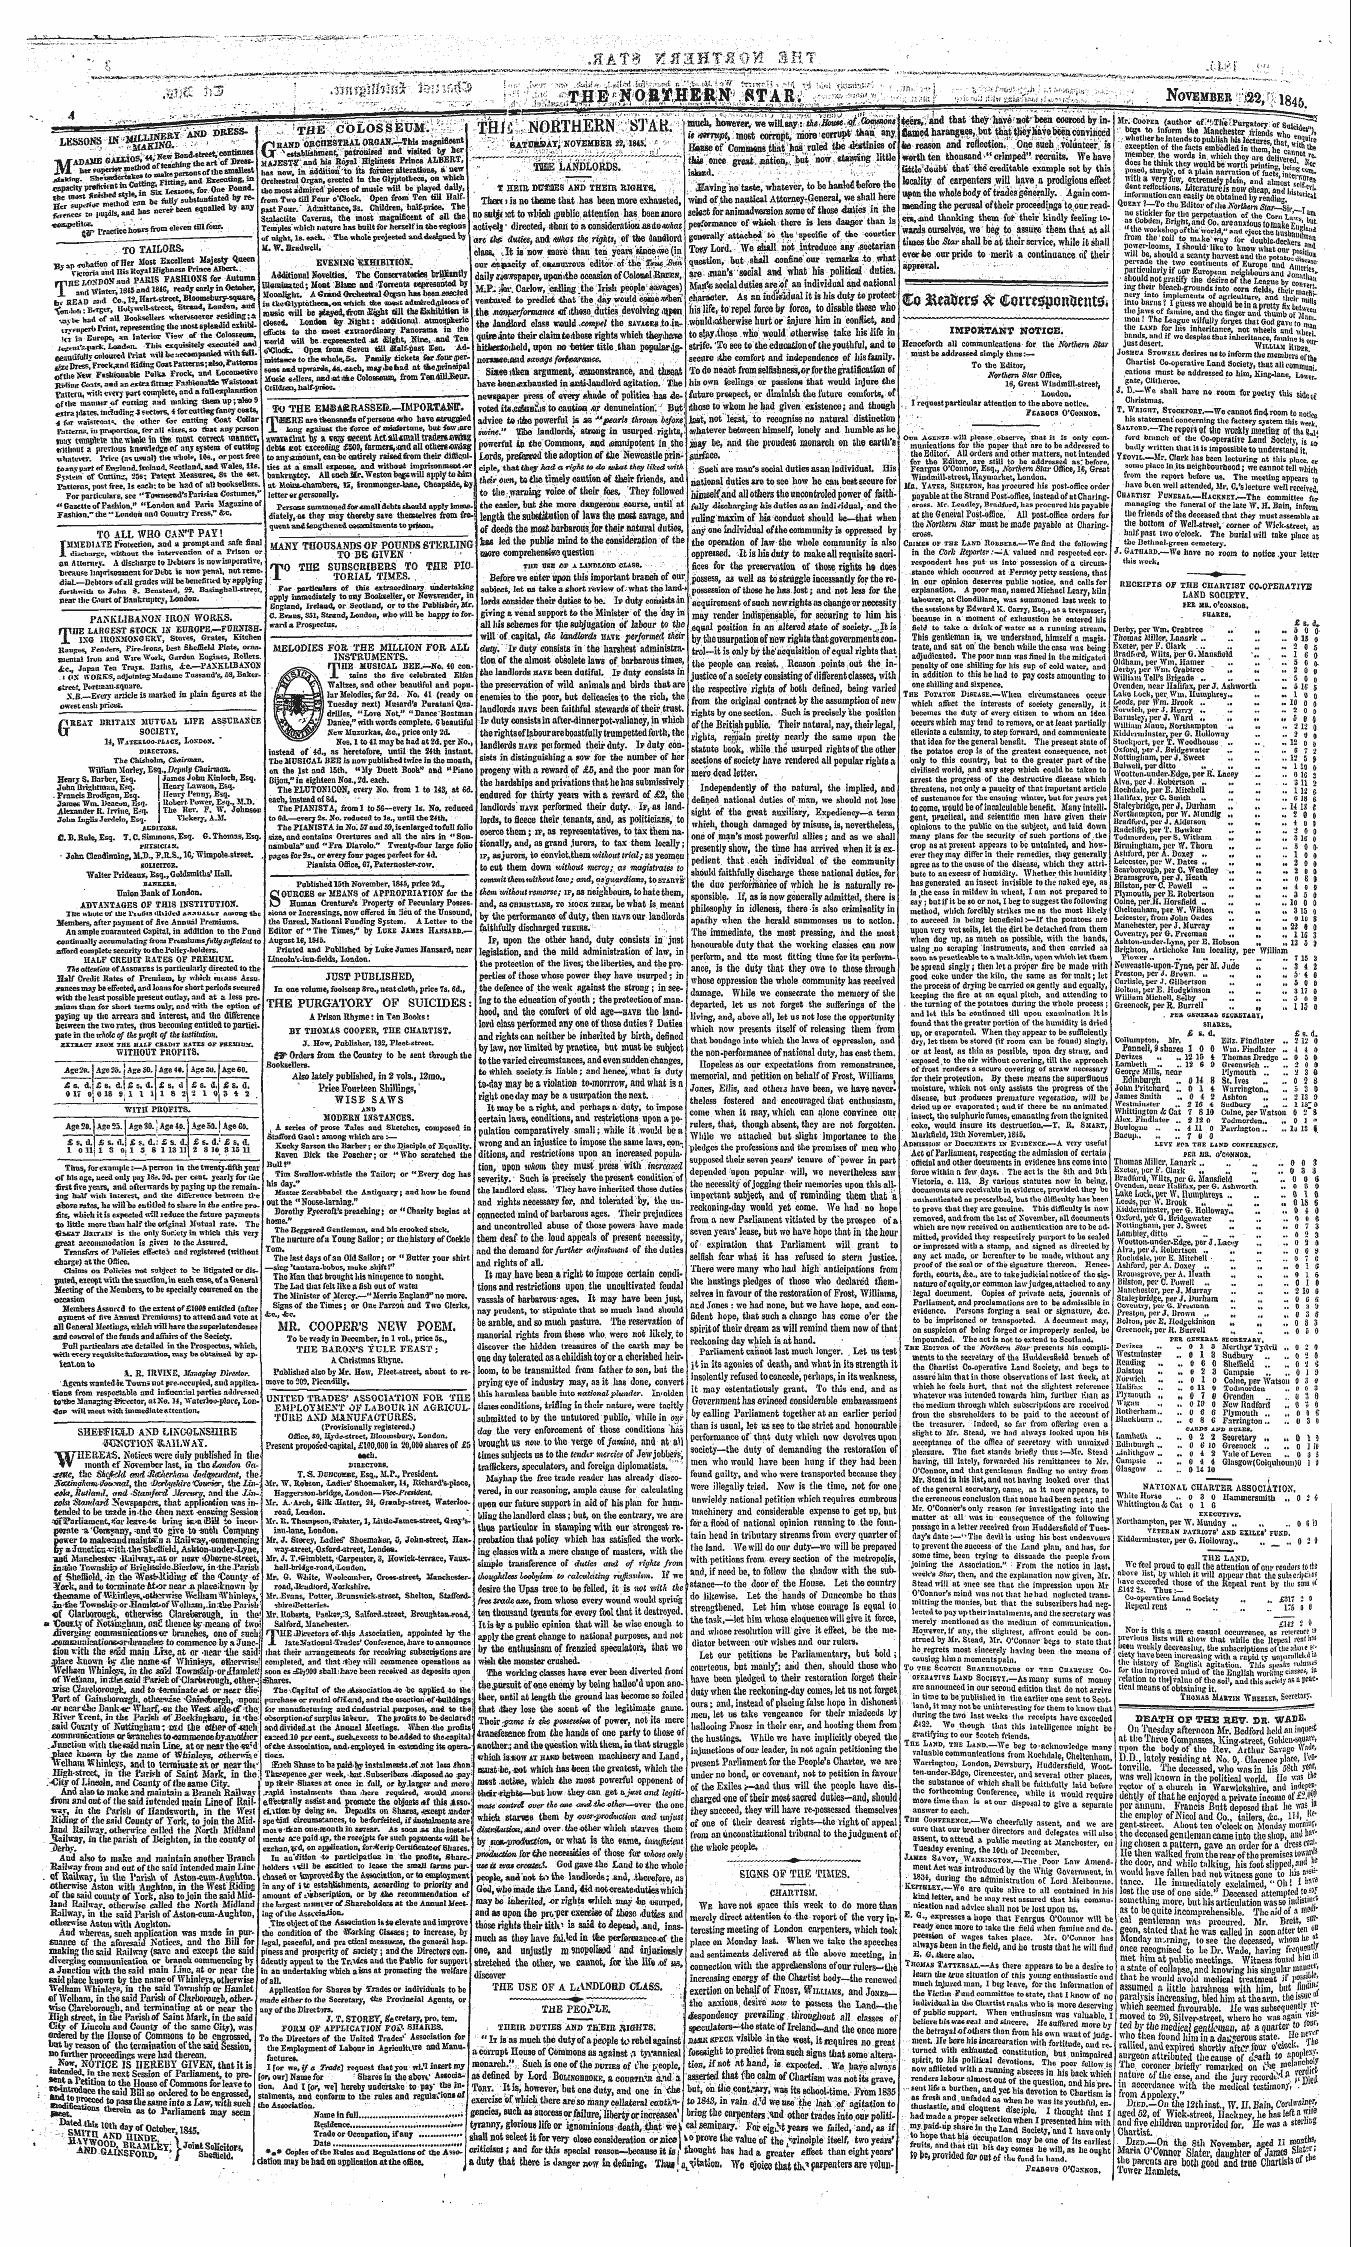 Northern Star (1837-1852): jS F Y, 3rd edition - Receipts Of The Chartist Co-Opebatitb La...